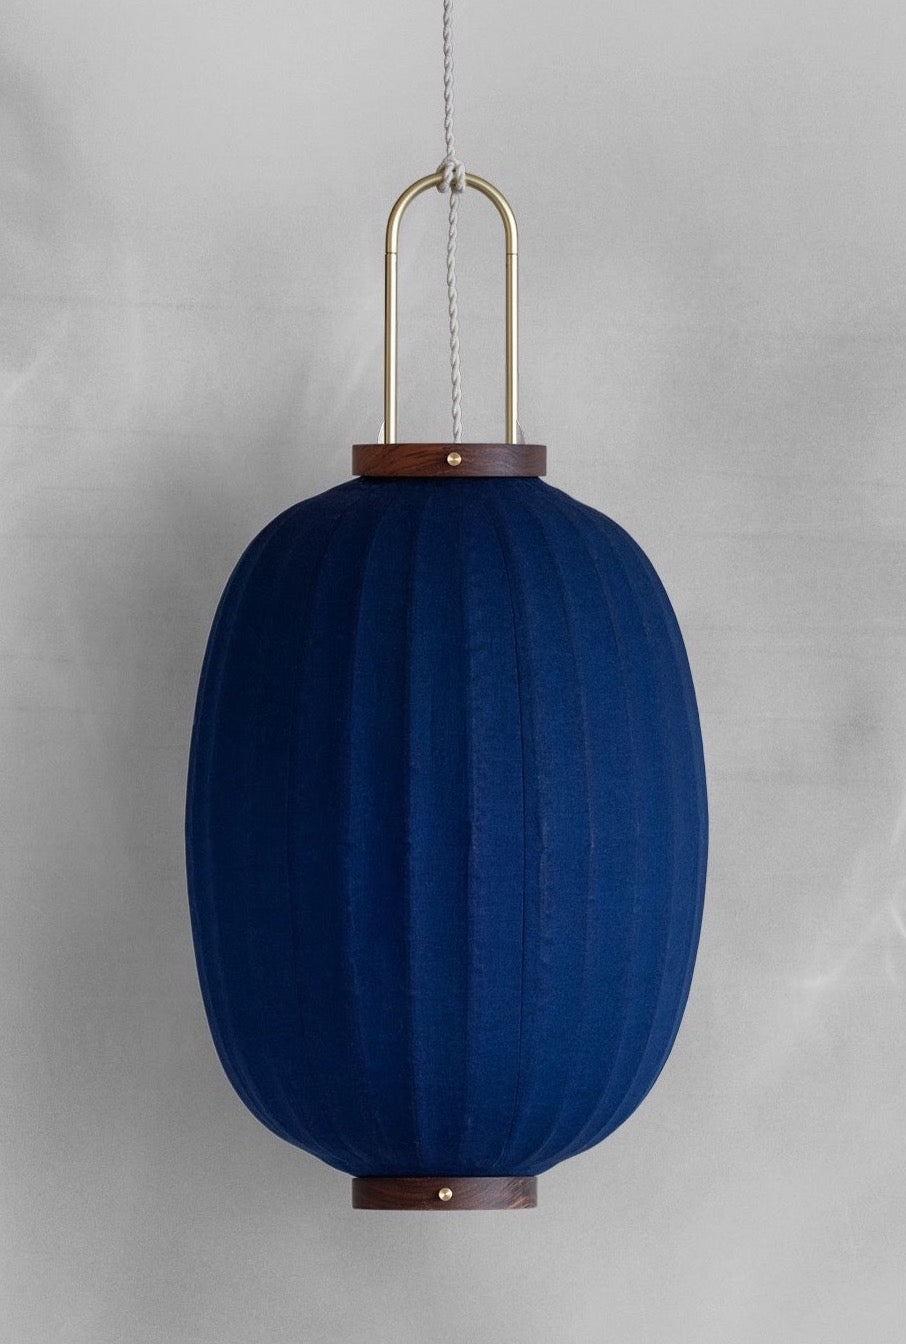 The Oval shape Plant Dyed Lantern Blue XL by Taiwan Lantern.